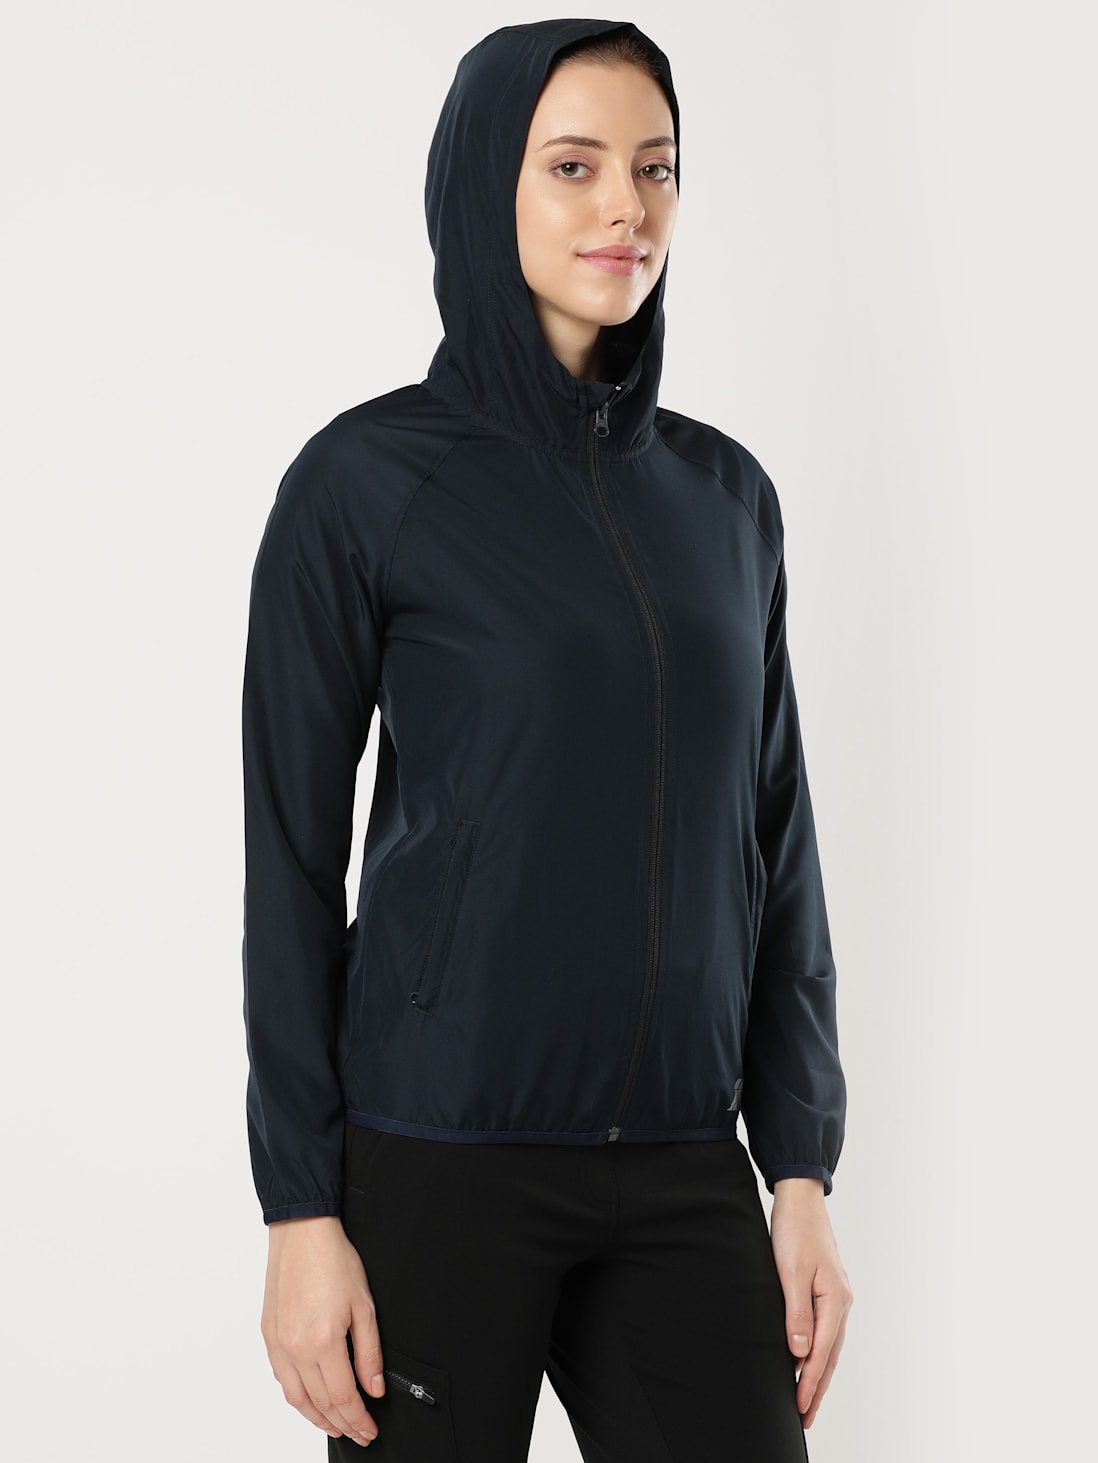 Jockey Women's Active Lightweight Mock Neck Zip Up Jacket, Faded  mauve-65300, Medium at Amazon Women's Clothing store